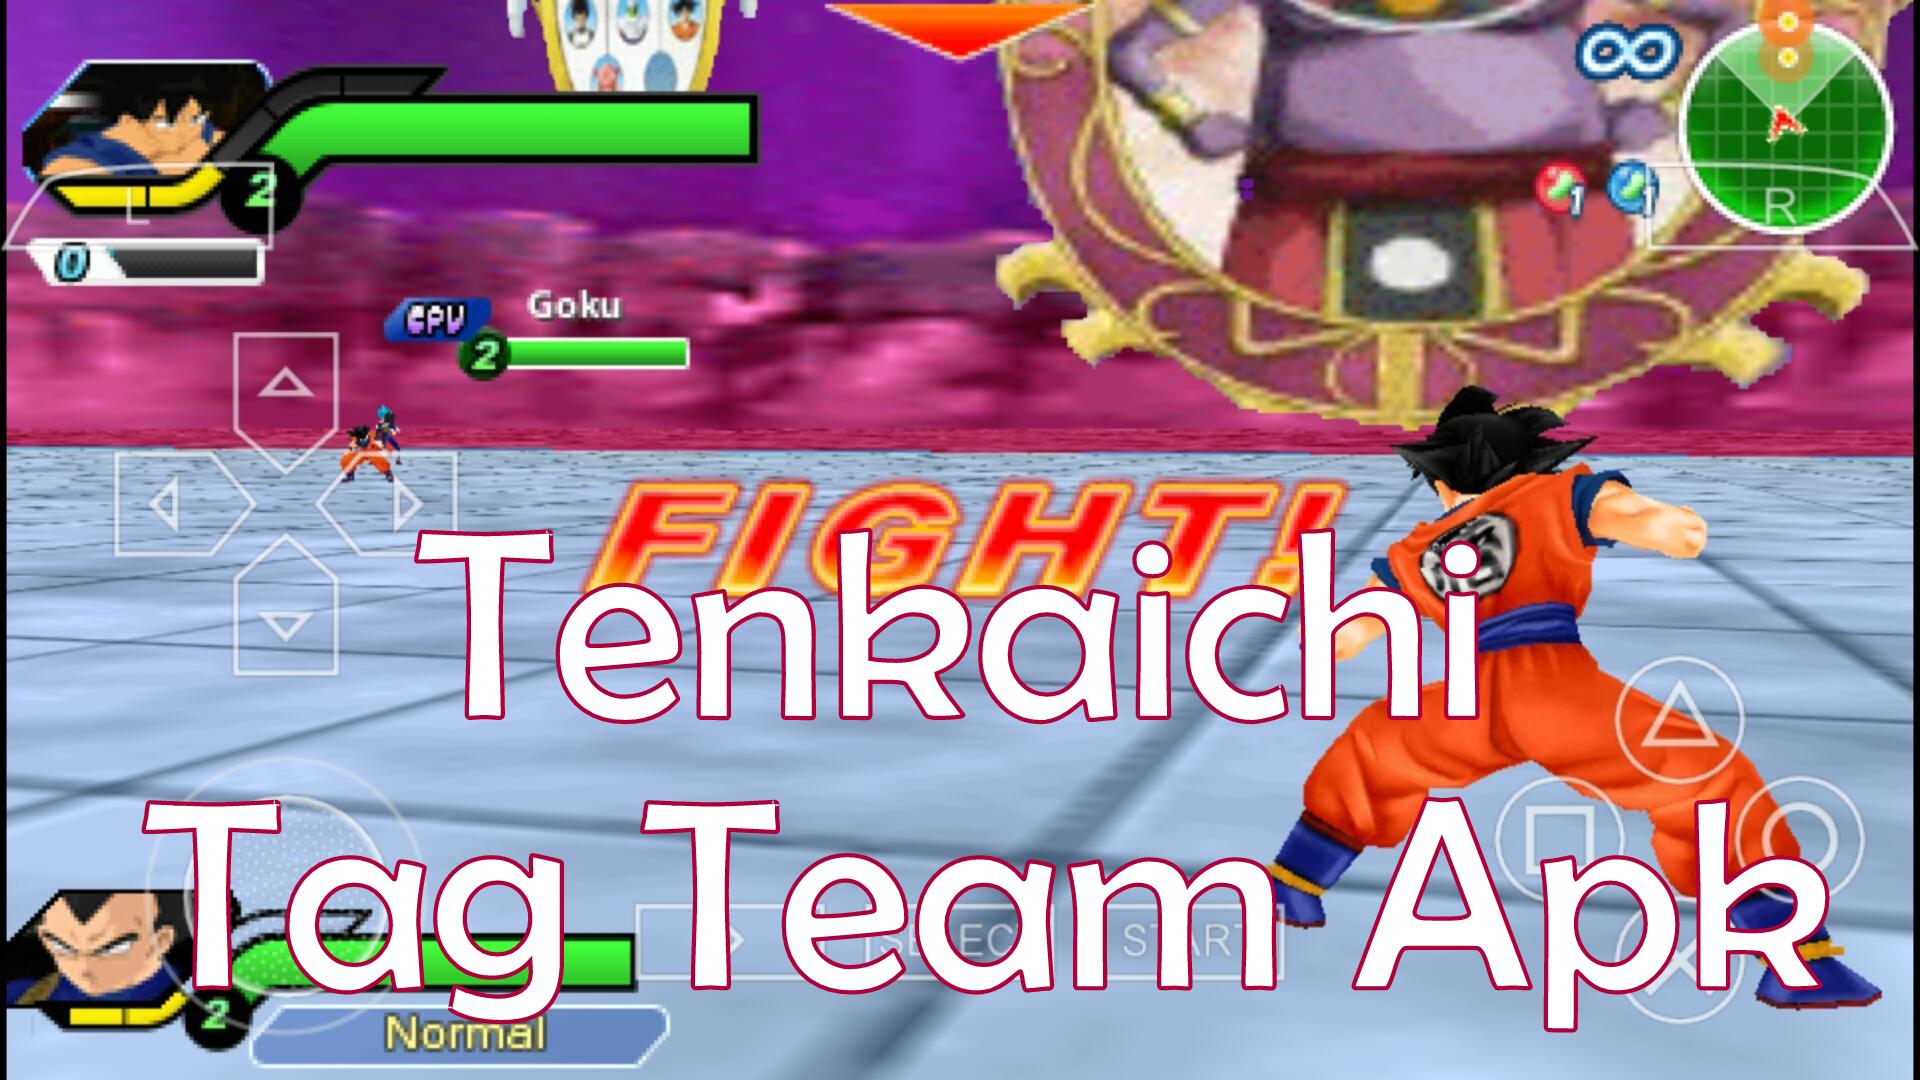 Dragon Ball Z Tenkaichi Tag Team Apk mod OBB Data